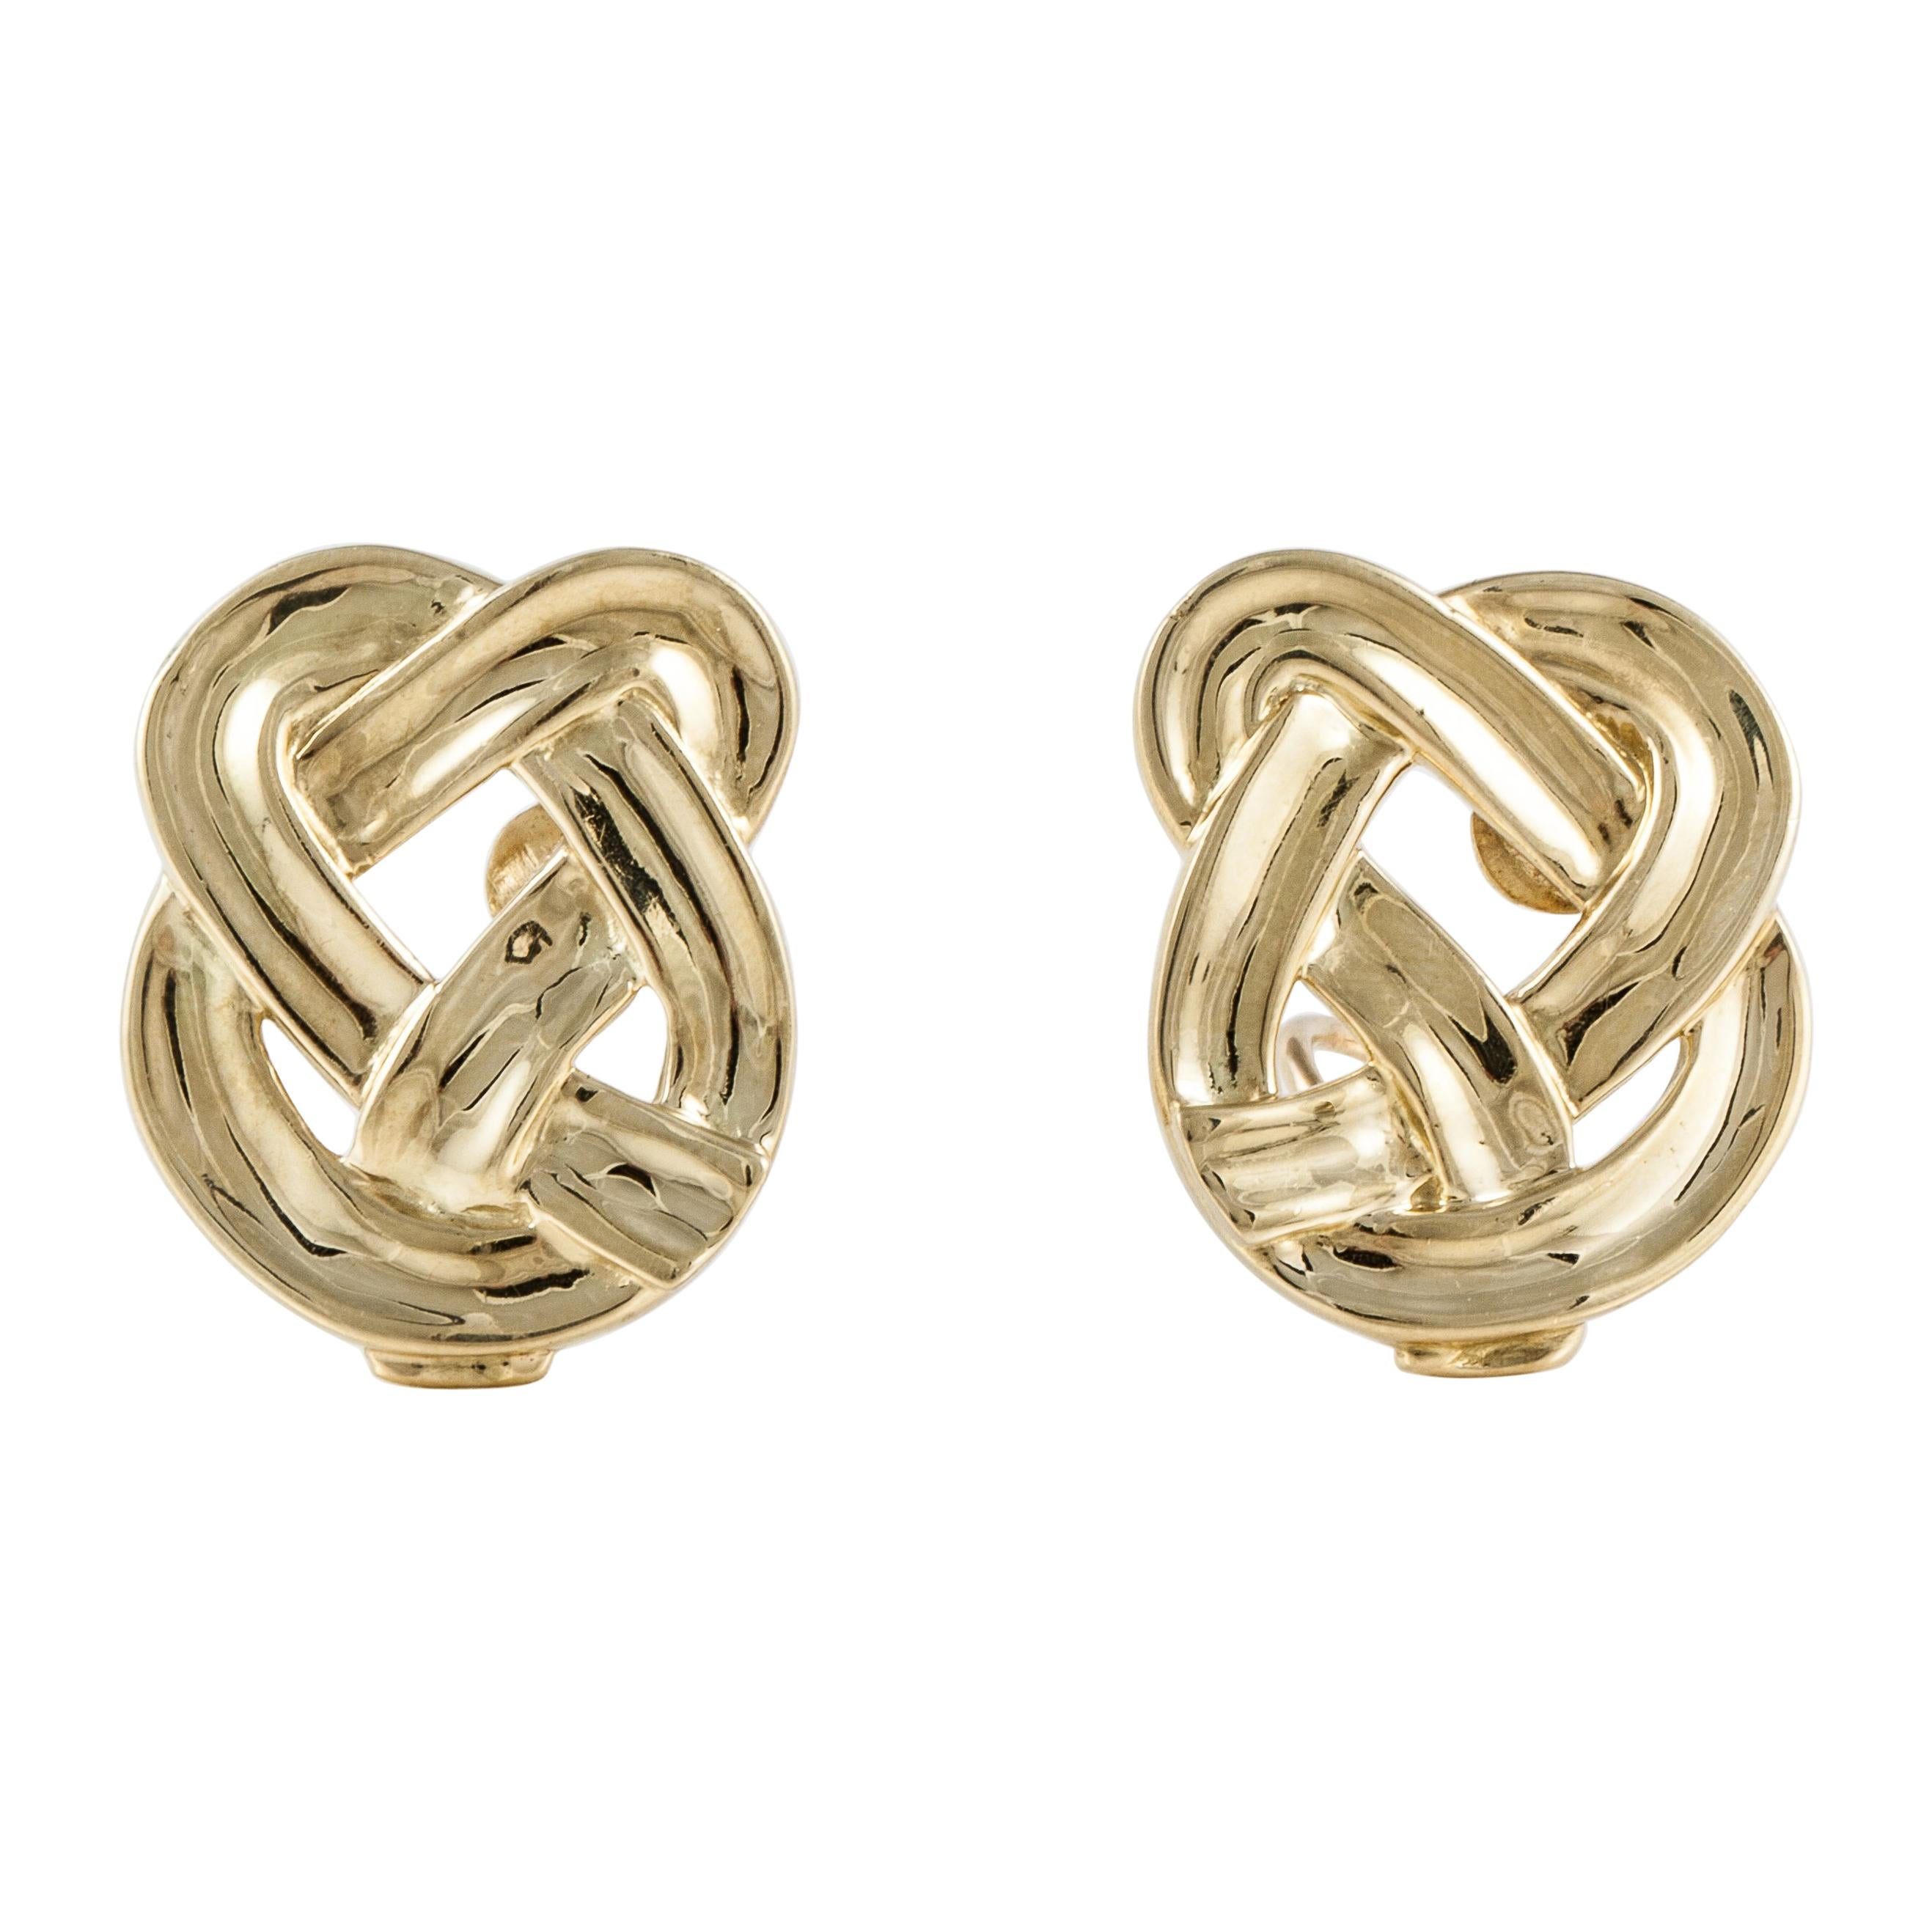 Angela Cummings für Tiffany & Co., 18 Karat Gold-Ohrringe